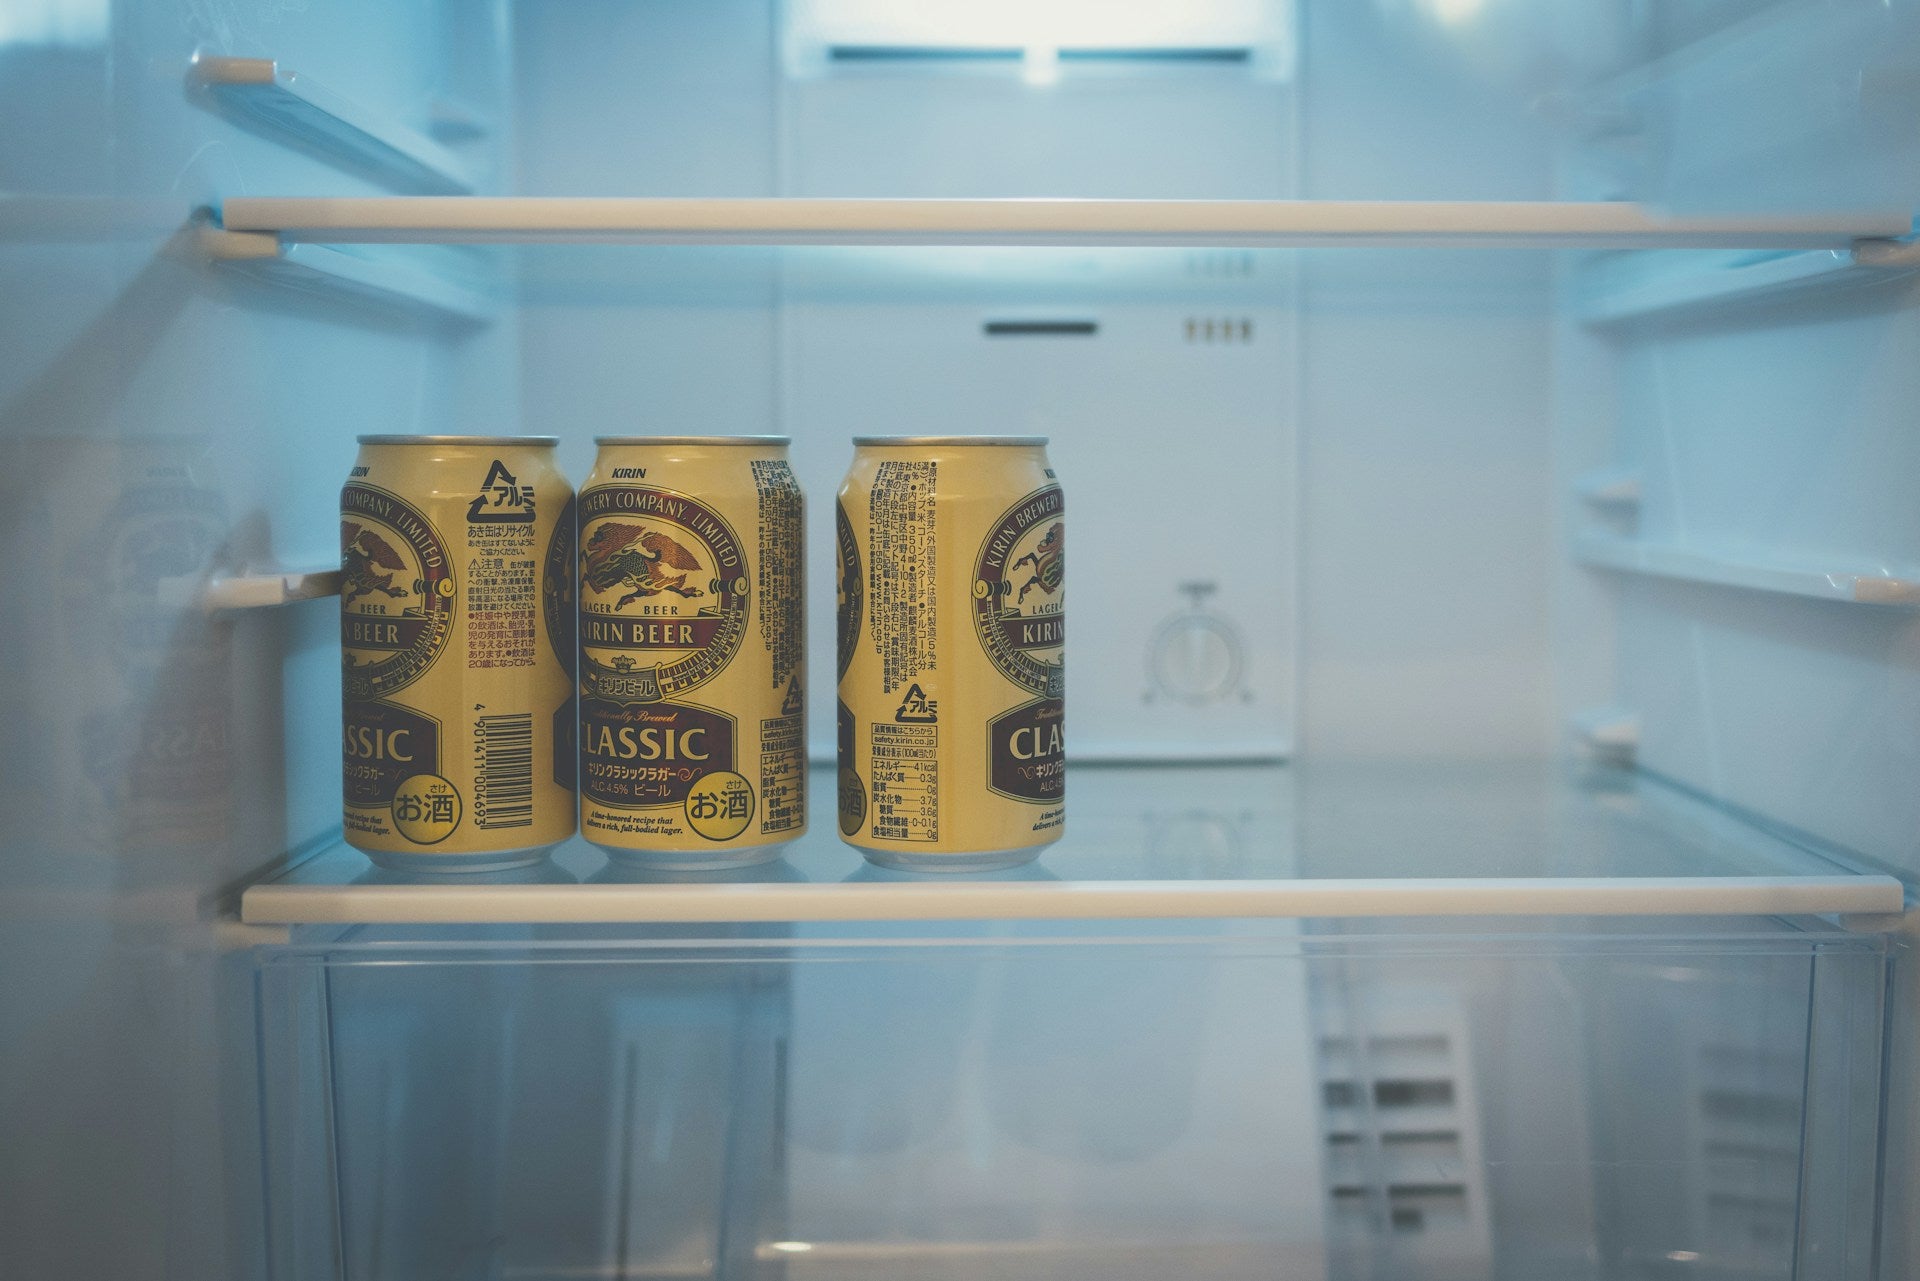 Freezerless Refrigerator Vs. Glass Door Refrigerator | Fridge.com